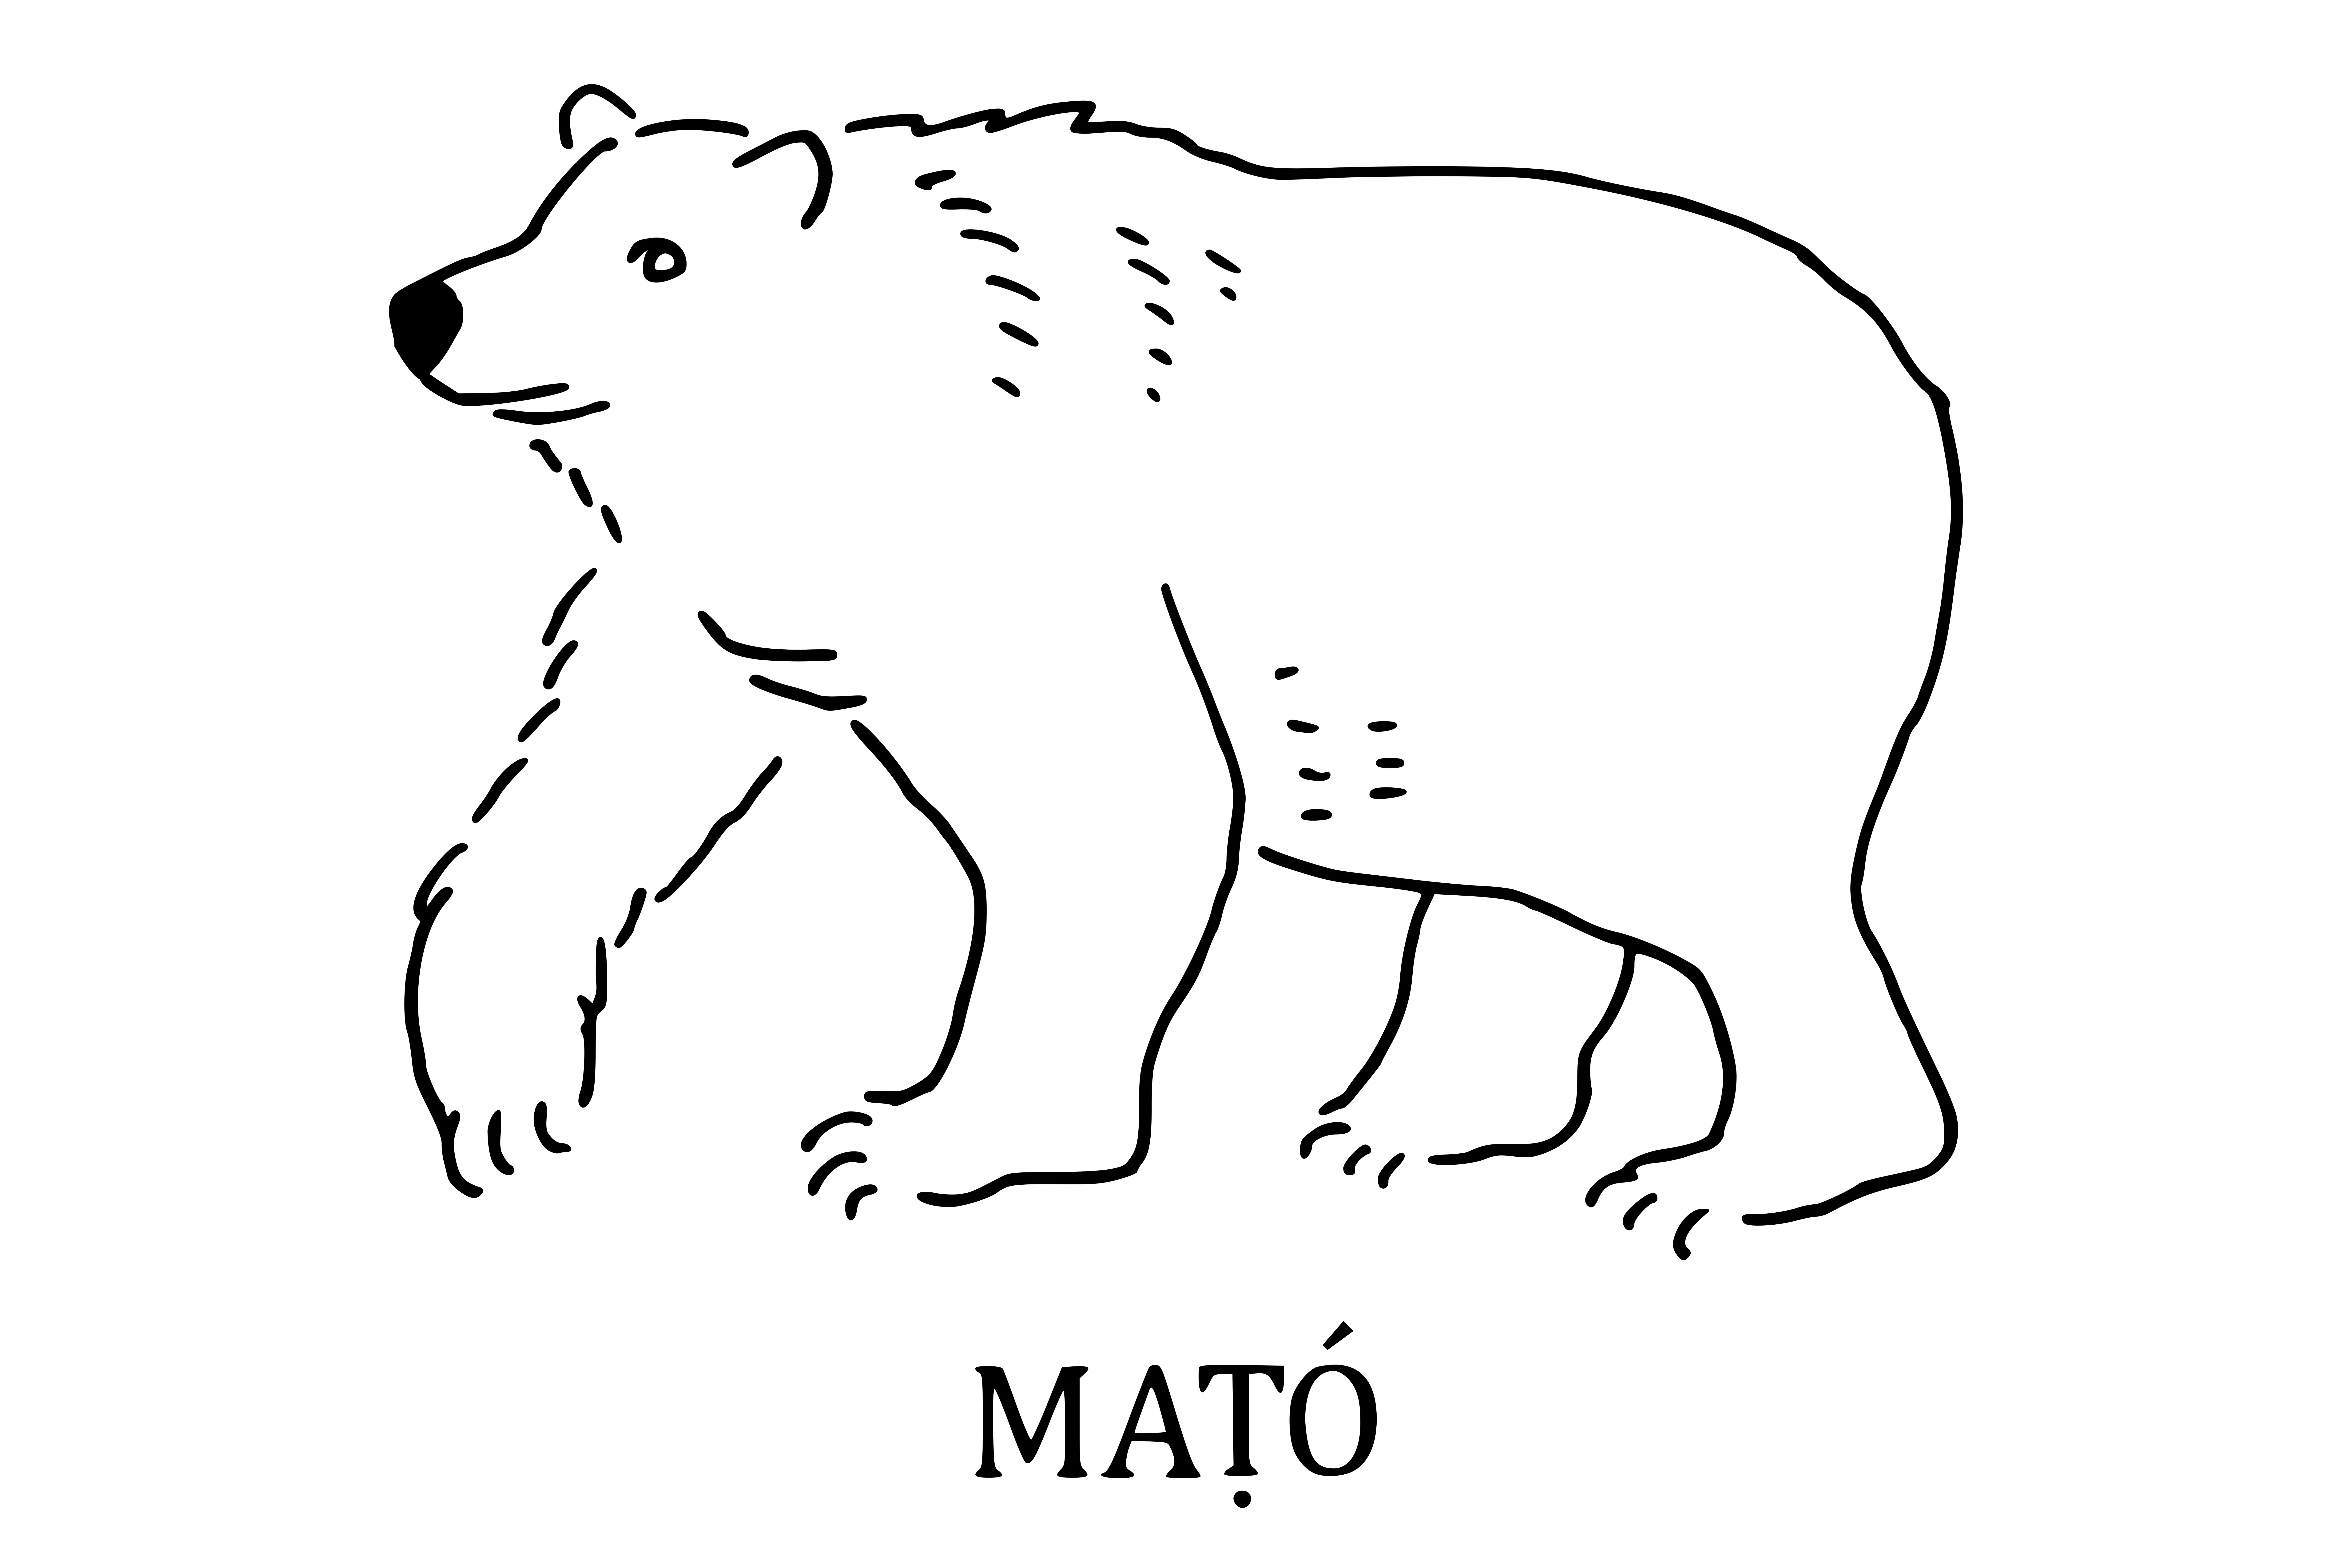 Mato-Bear Sidewalk Stamp